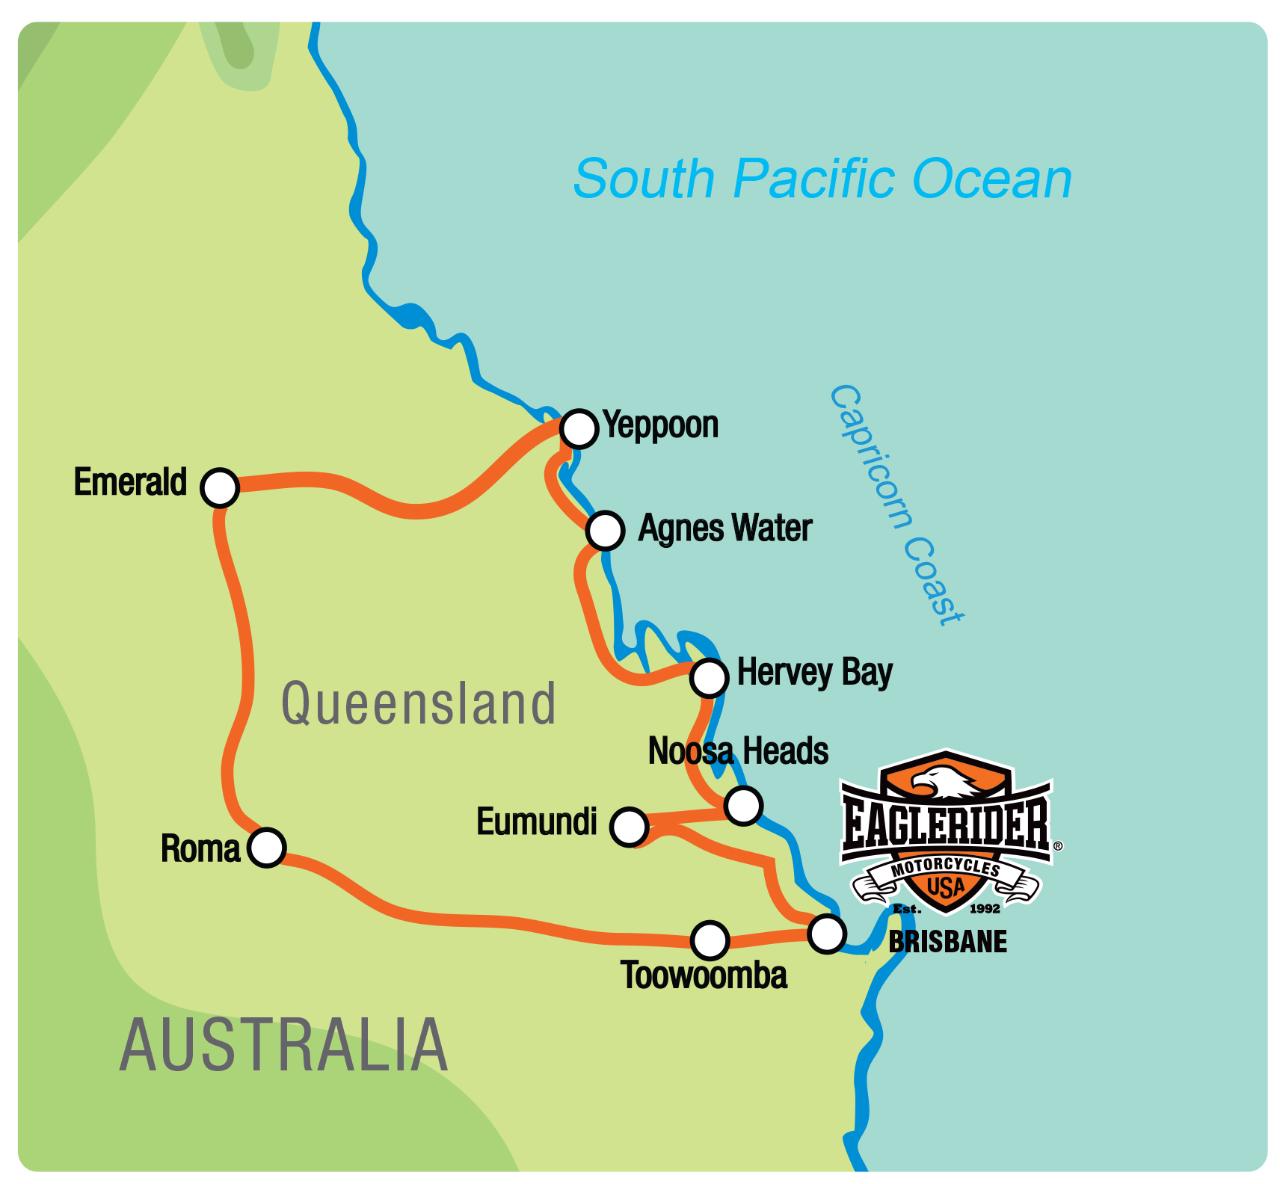 Capricorn Coast Queensland - Self Drive Motorcycle Tour (BNE)